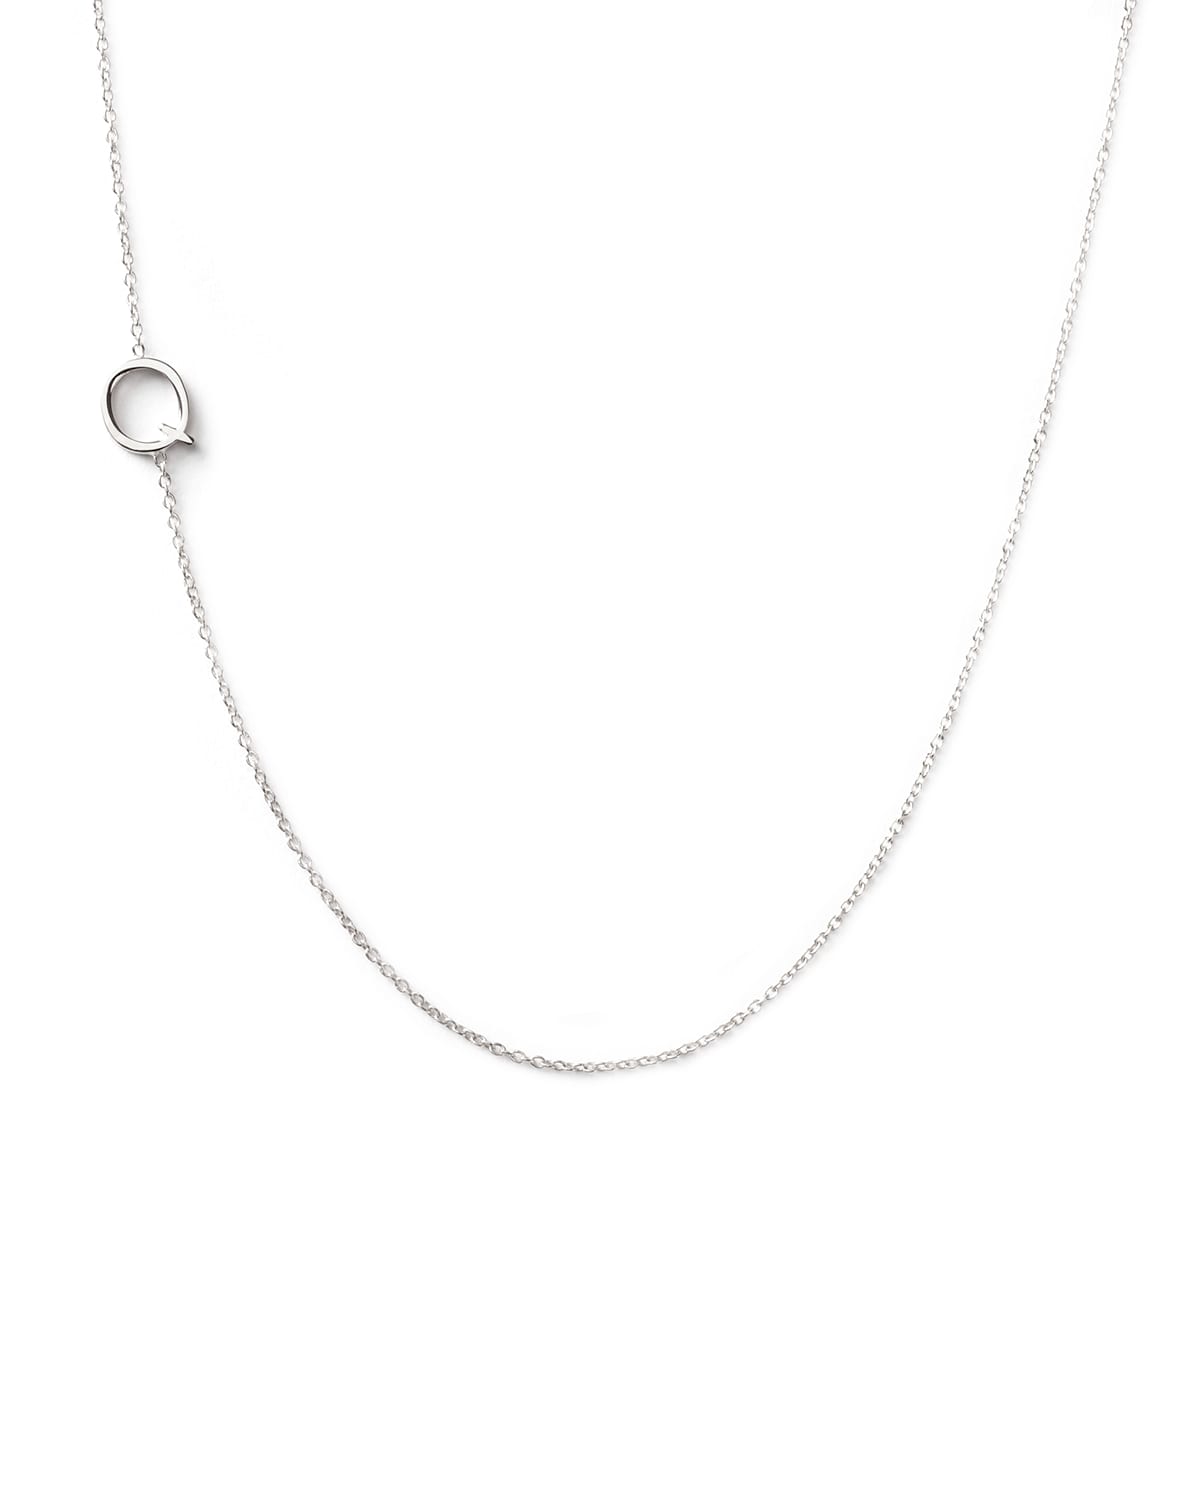 Maya Brenner Designs 14k White Gold Mini Letter Necklace In Q